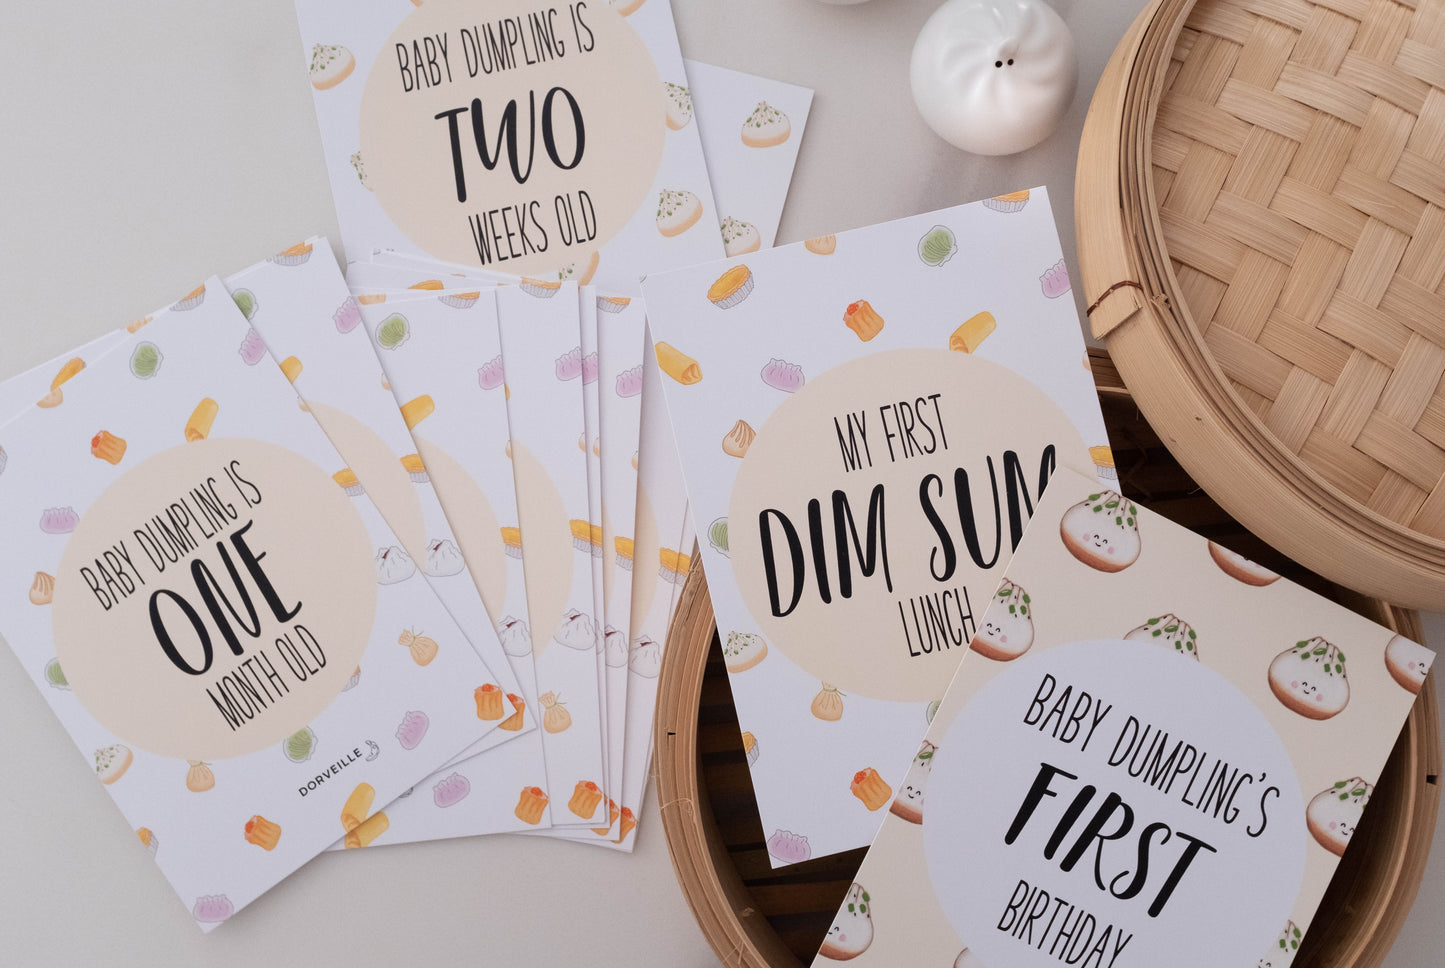 Dim Sum inspired baby milestone cards in a steamer basket